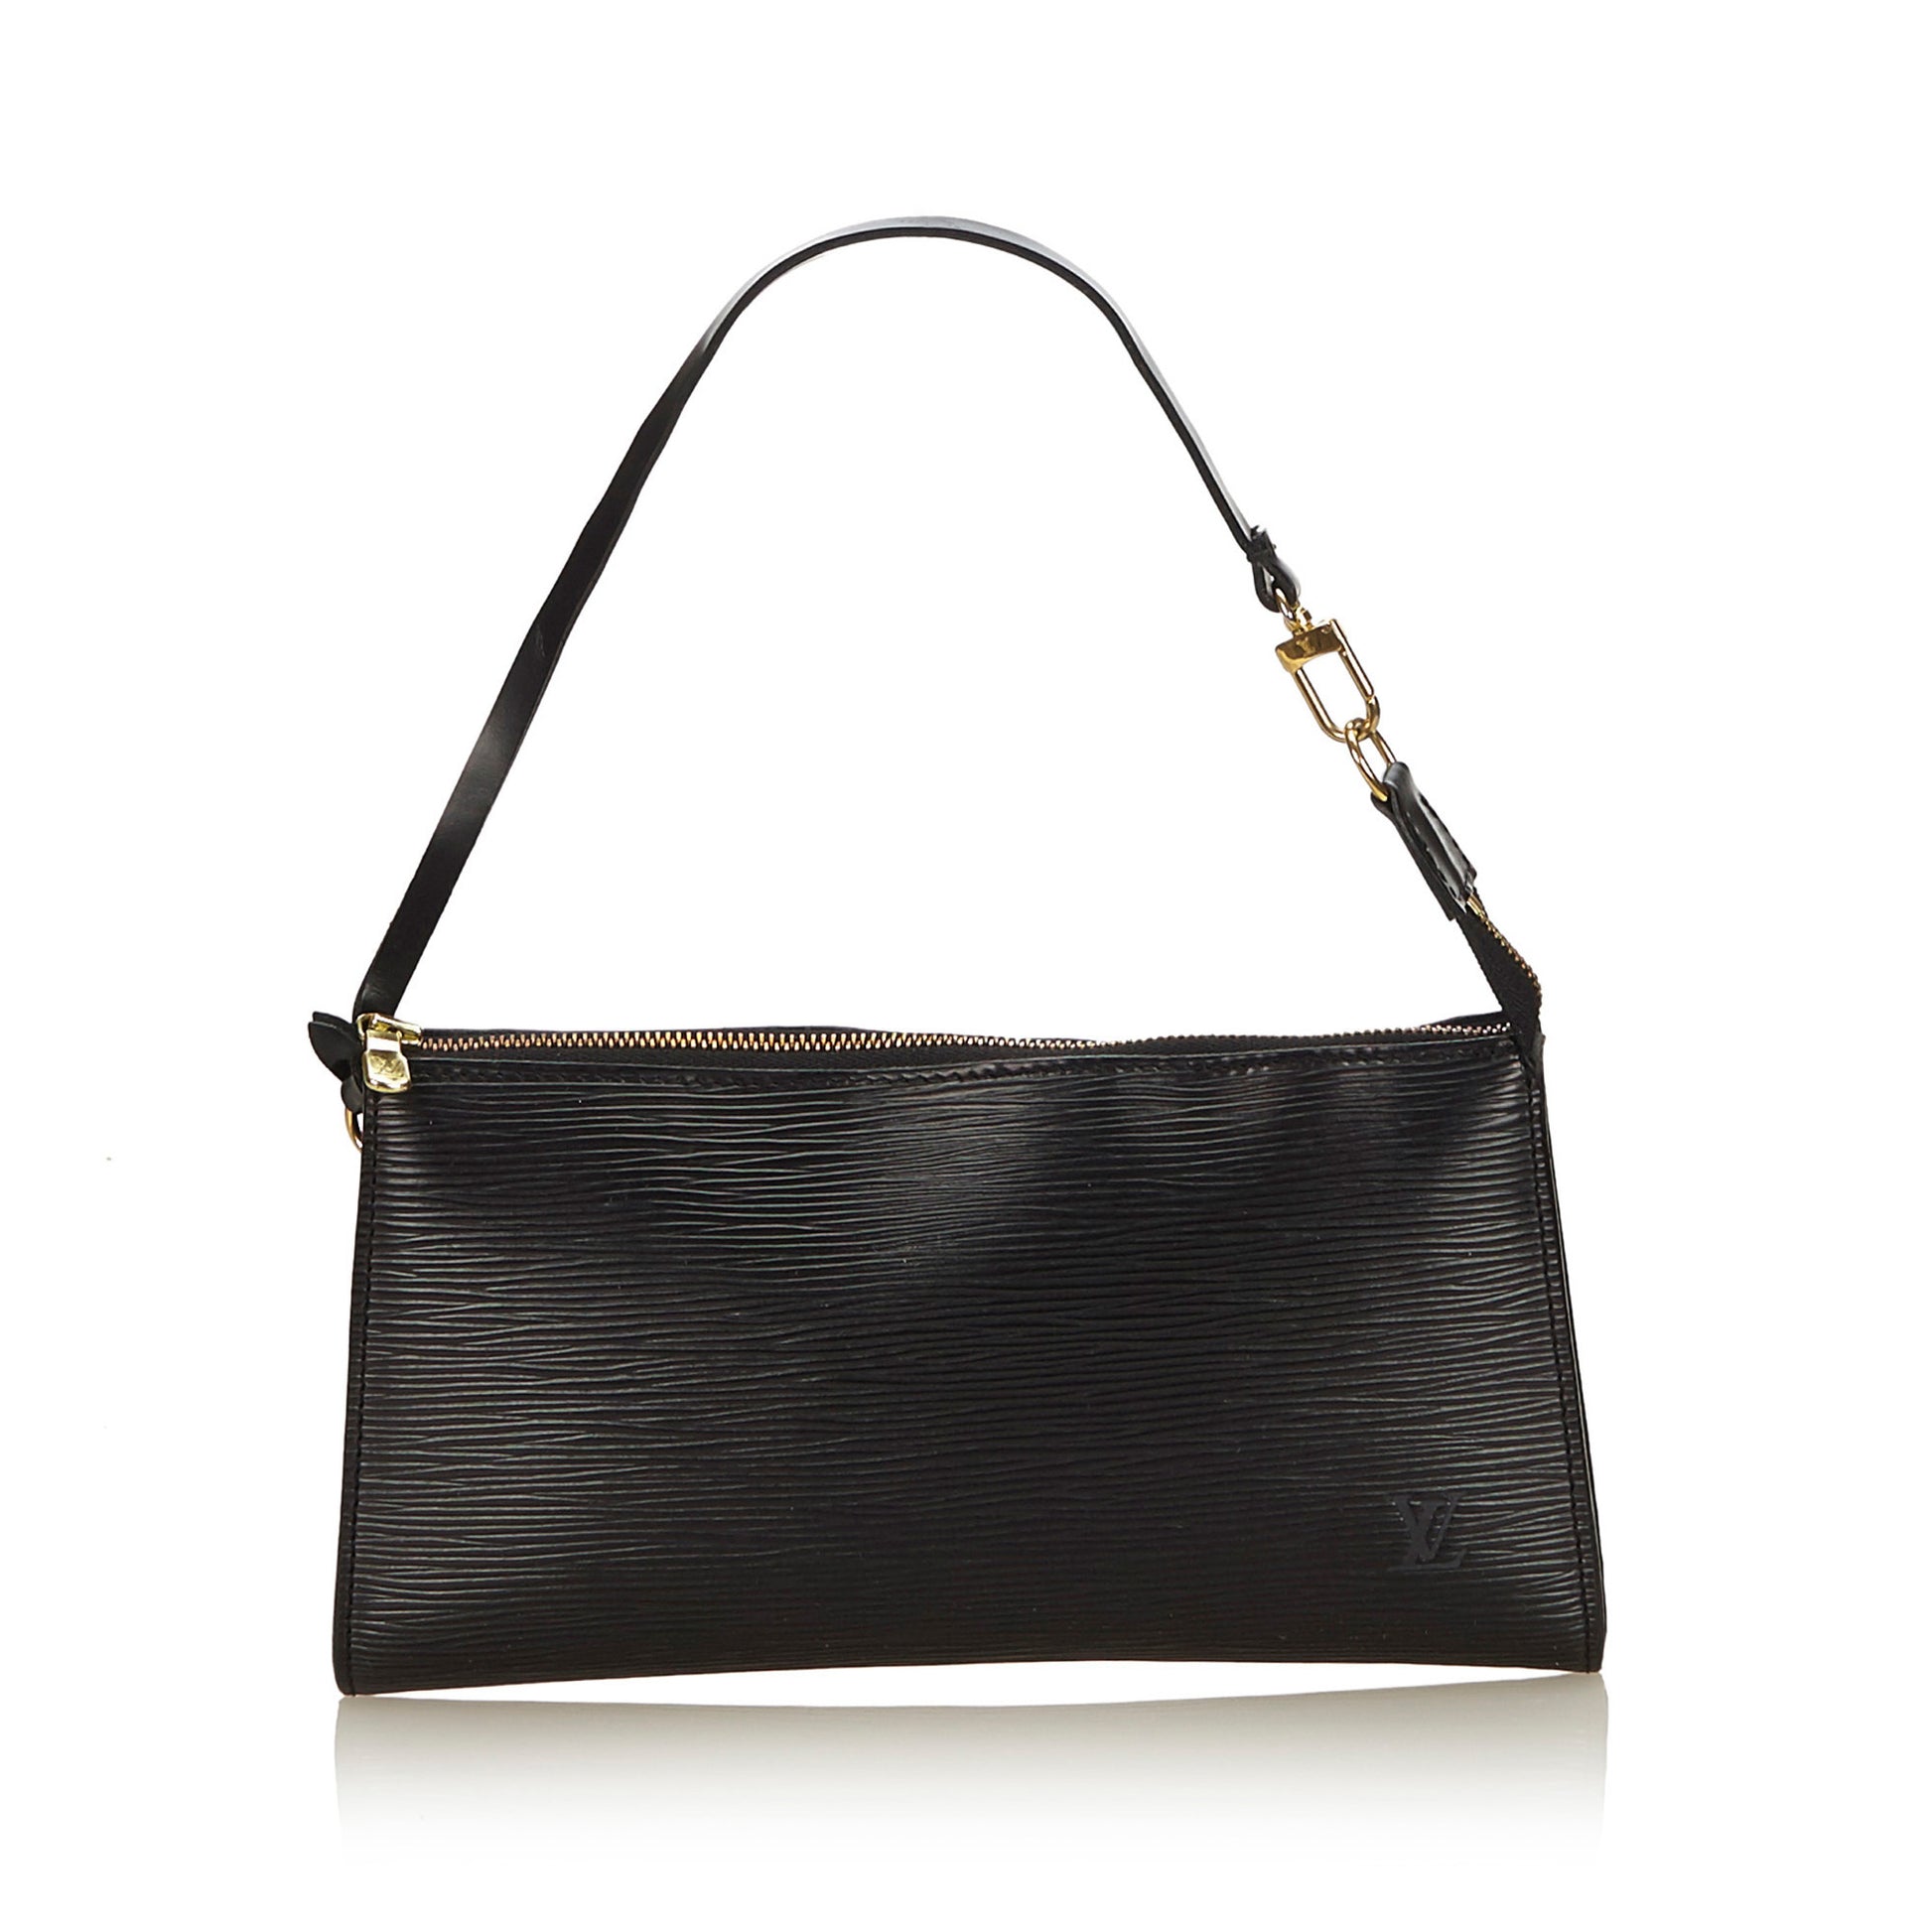 Authentic Louis Vuitton Epi Malesherbes Black Leather Handbag